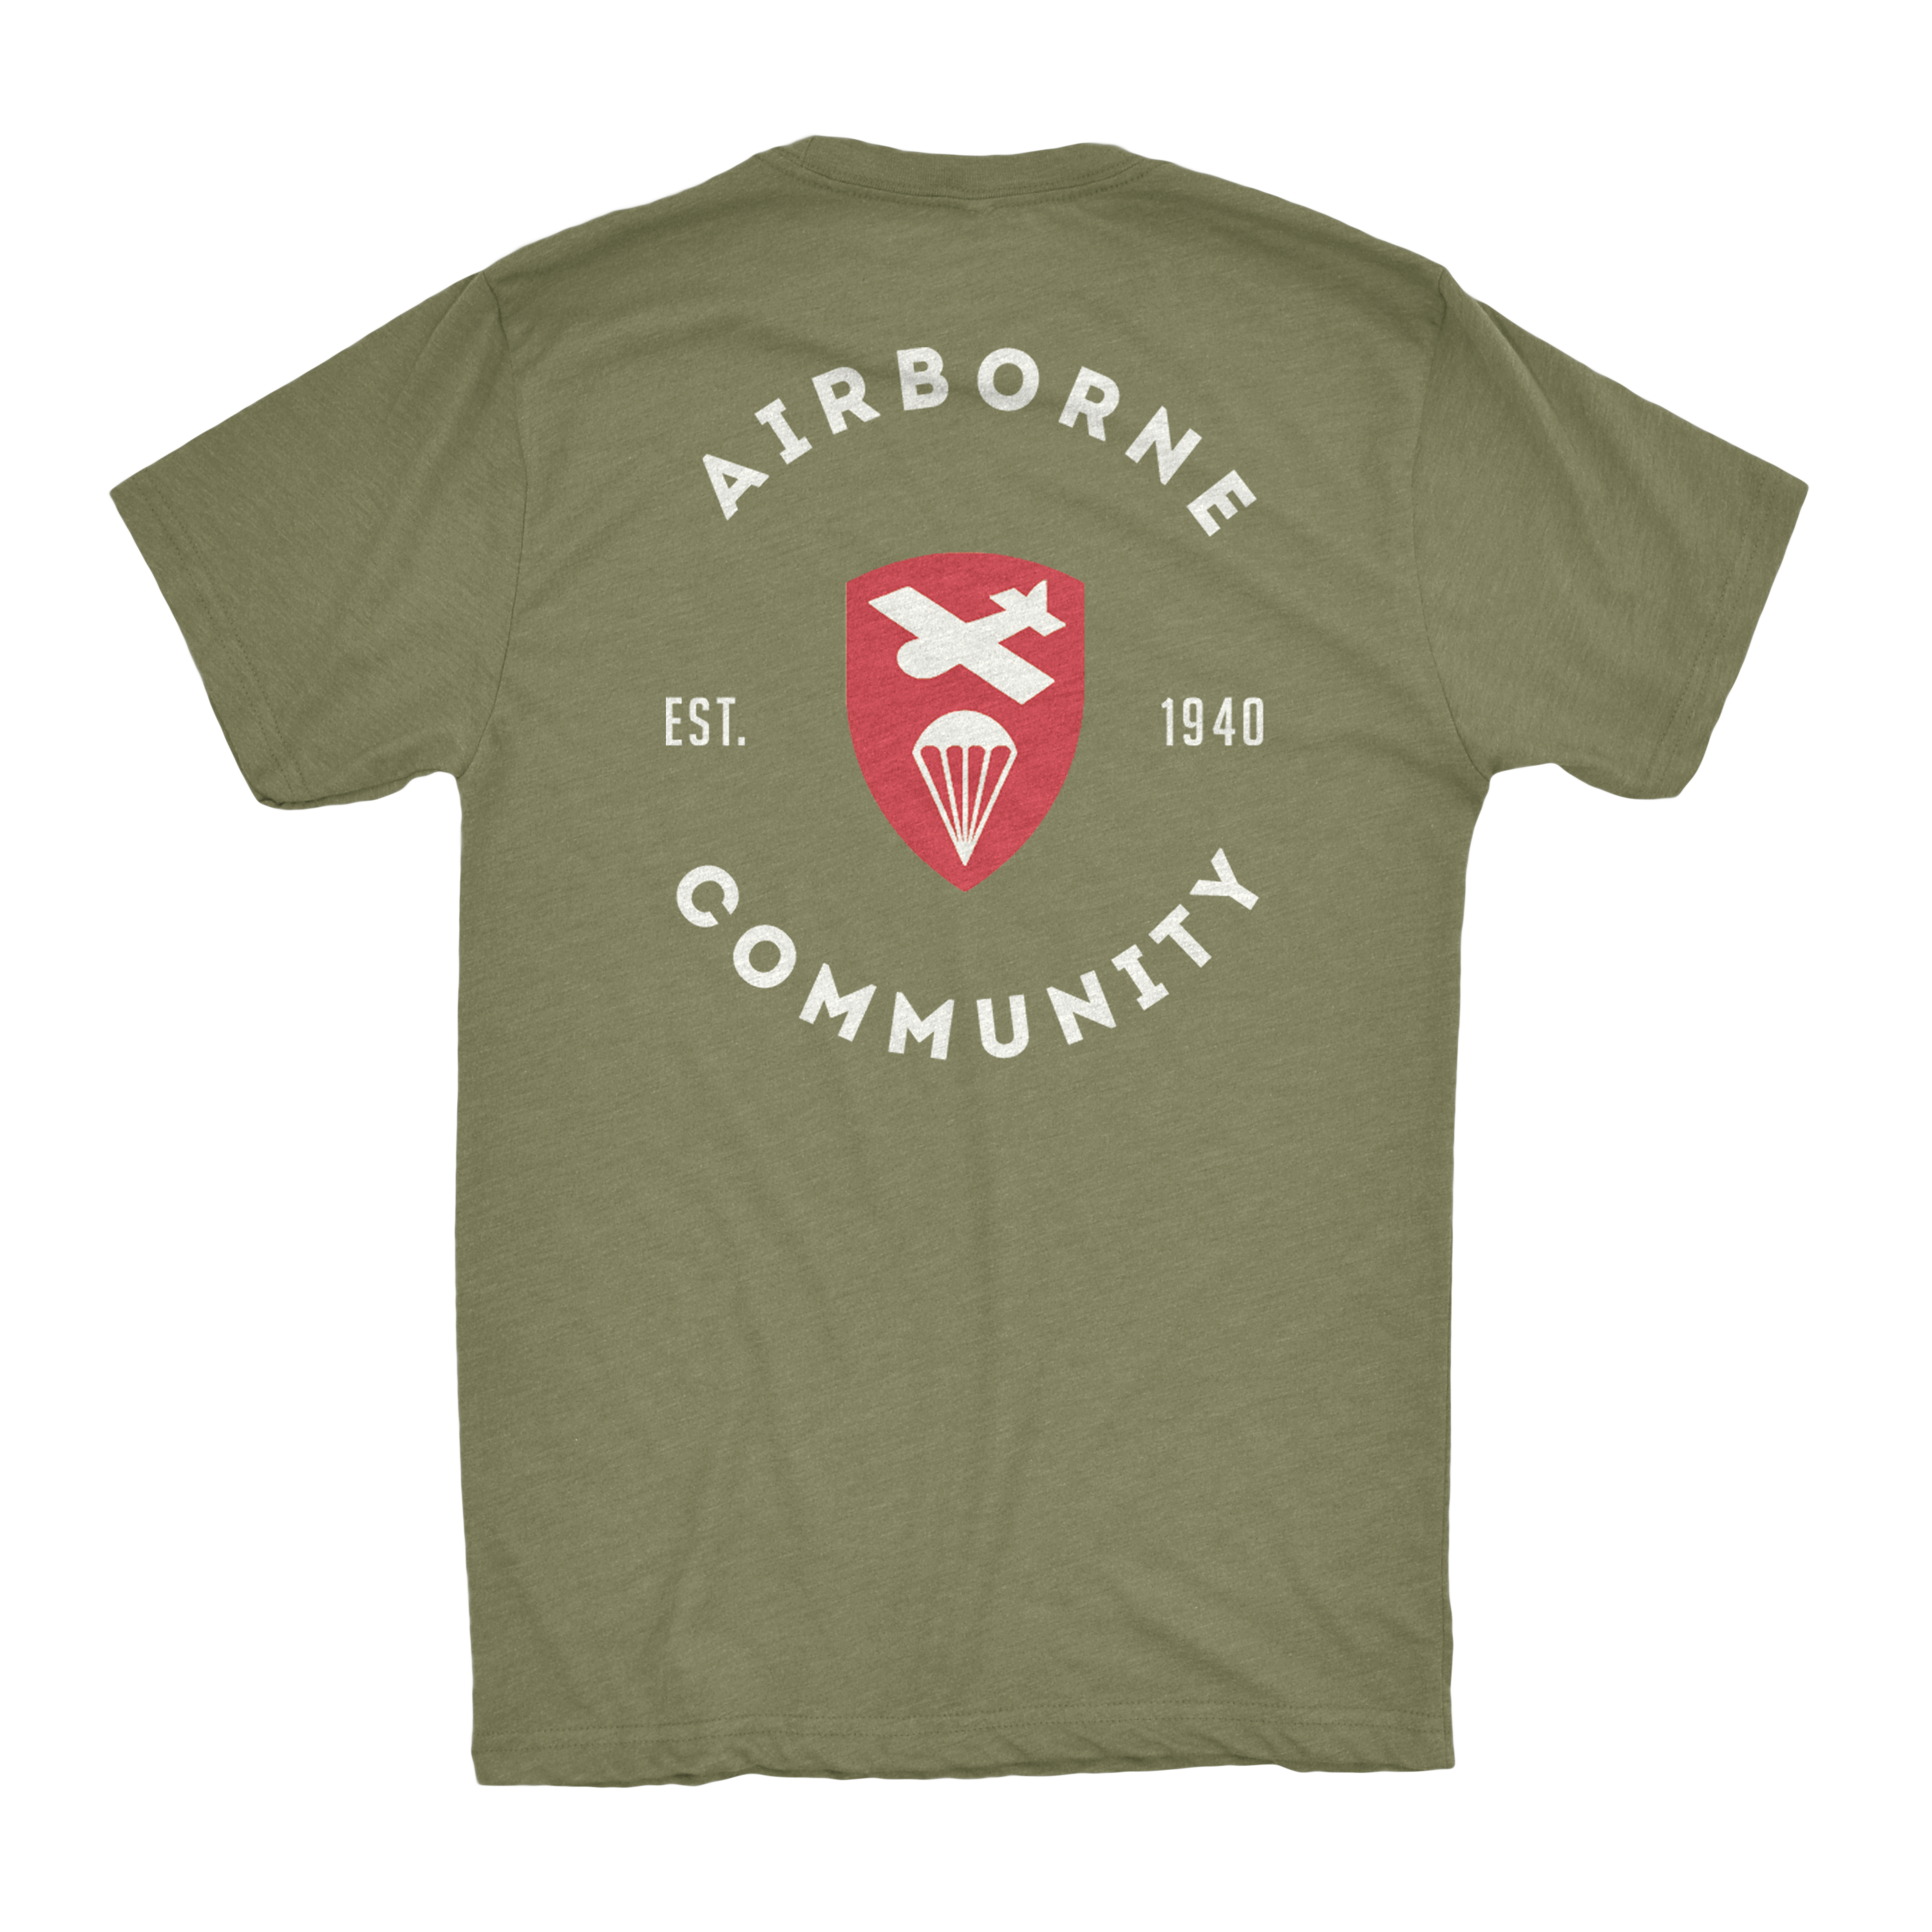 Wetsu Company Airborne Community Hoodie Medium